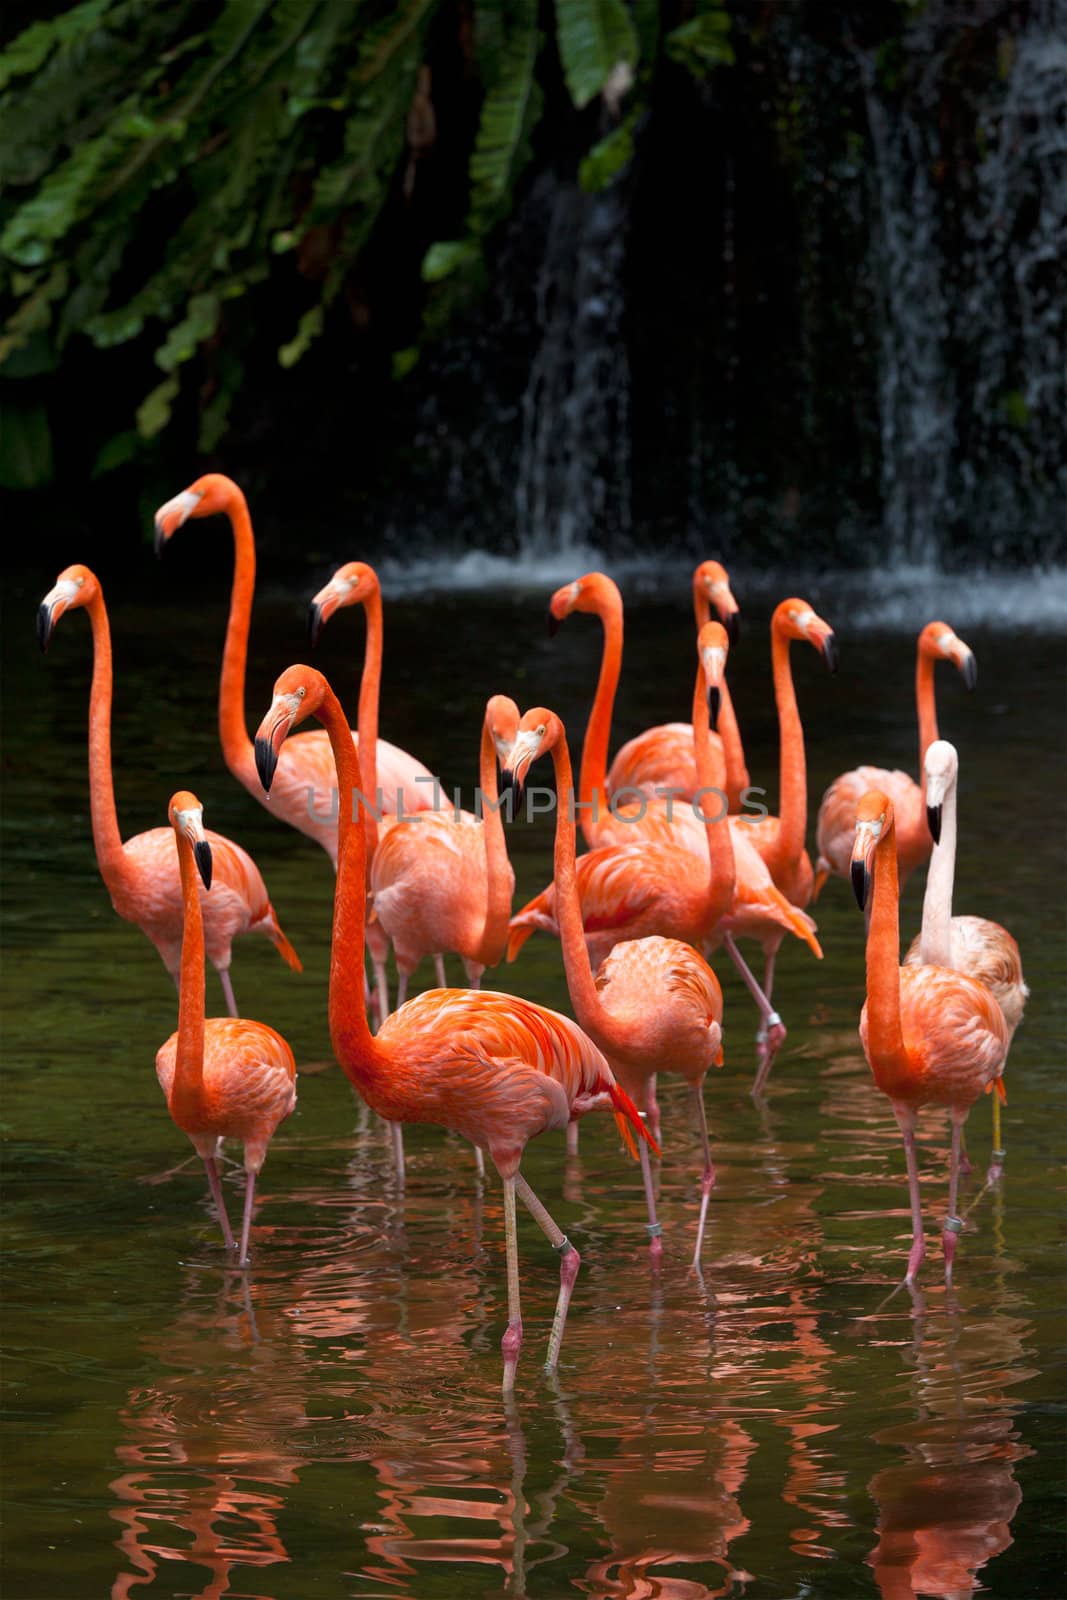 American Flamingo (Phoenicopterus ruber), Orange flamingo by dimol